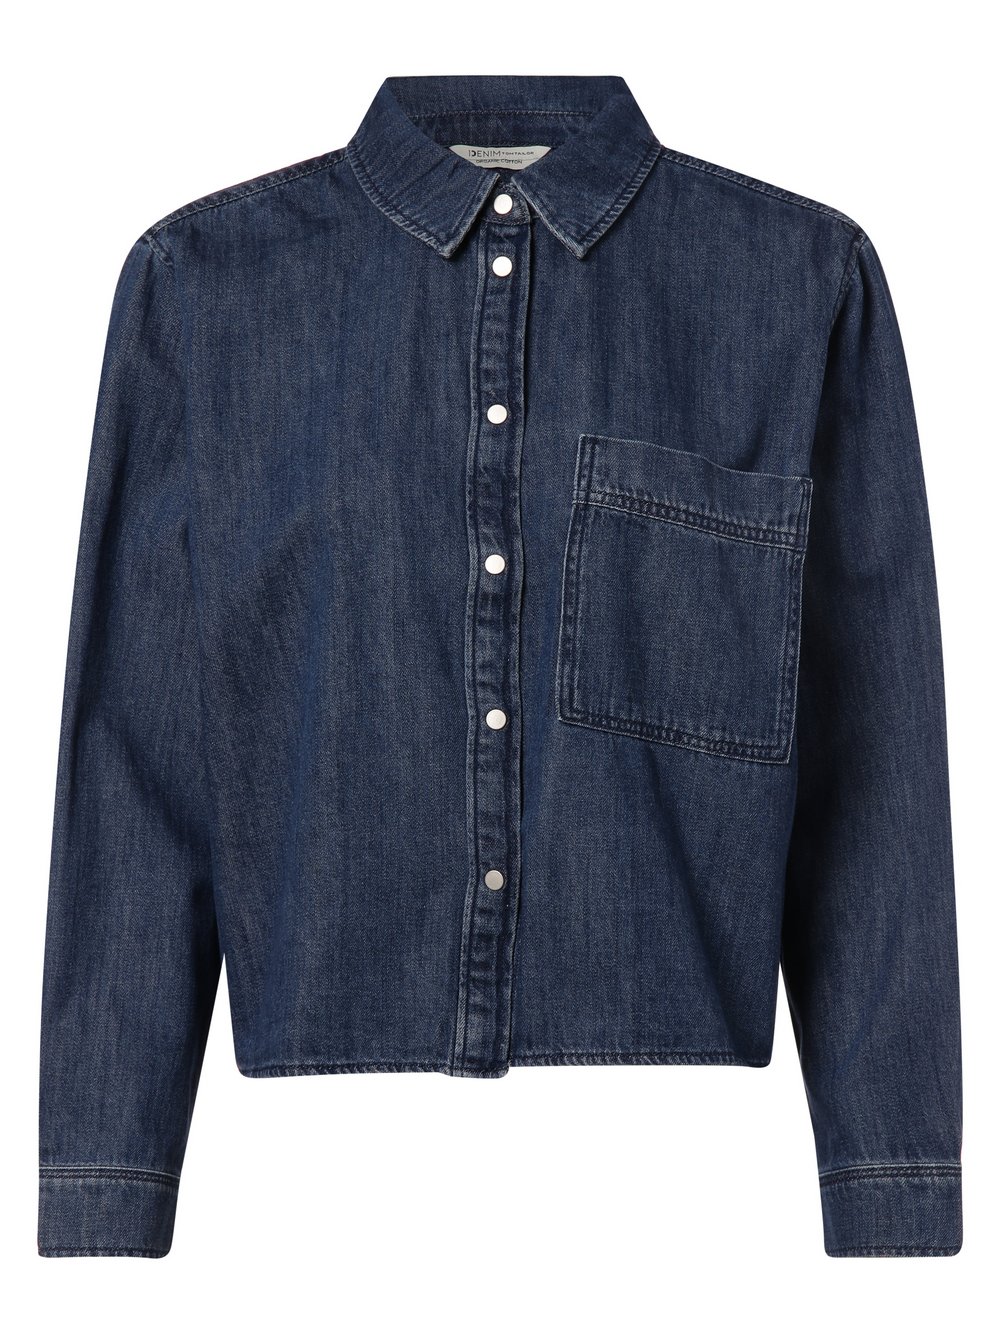 Tom Tailor Denim - Damska koszula jeansowa, niebieski